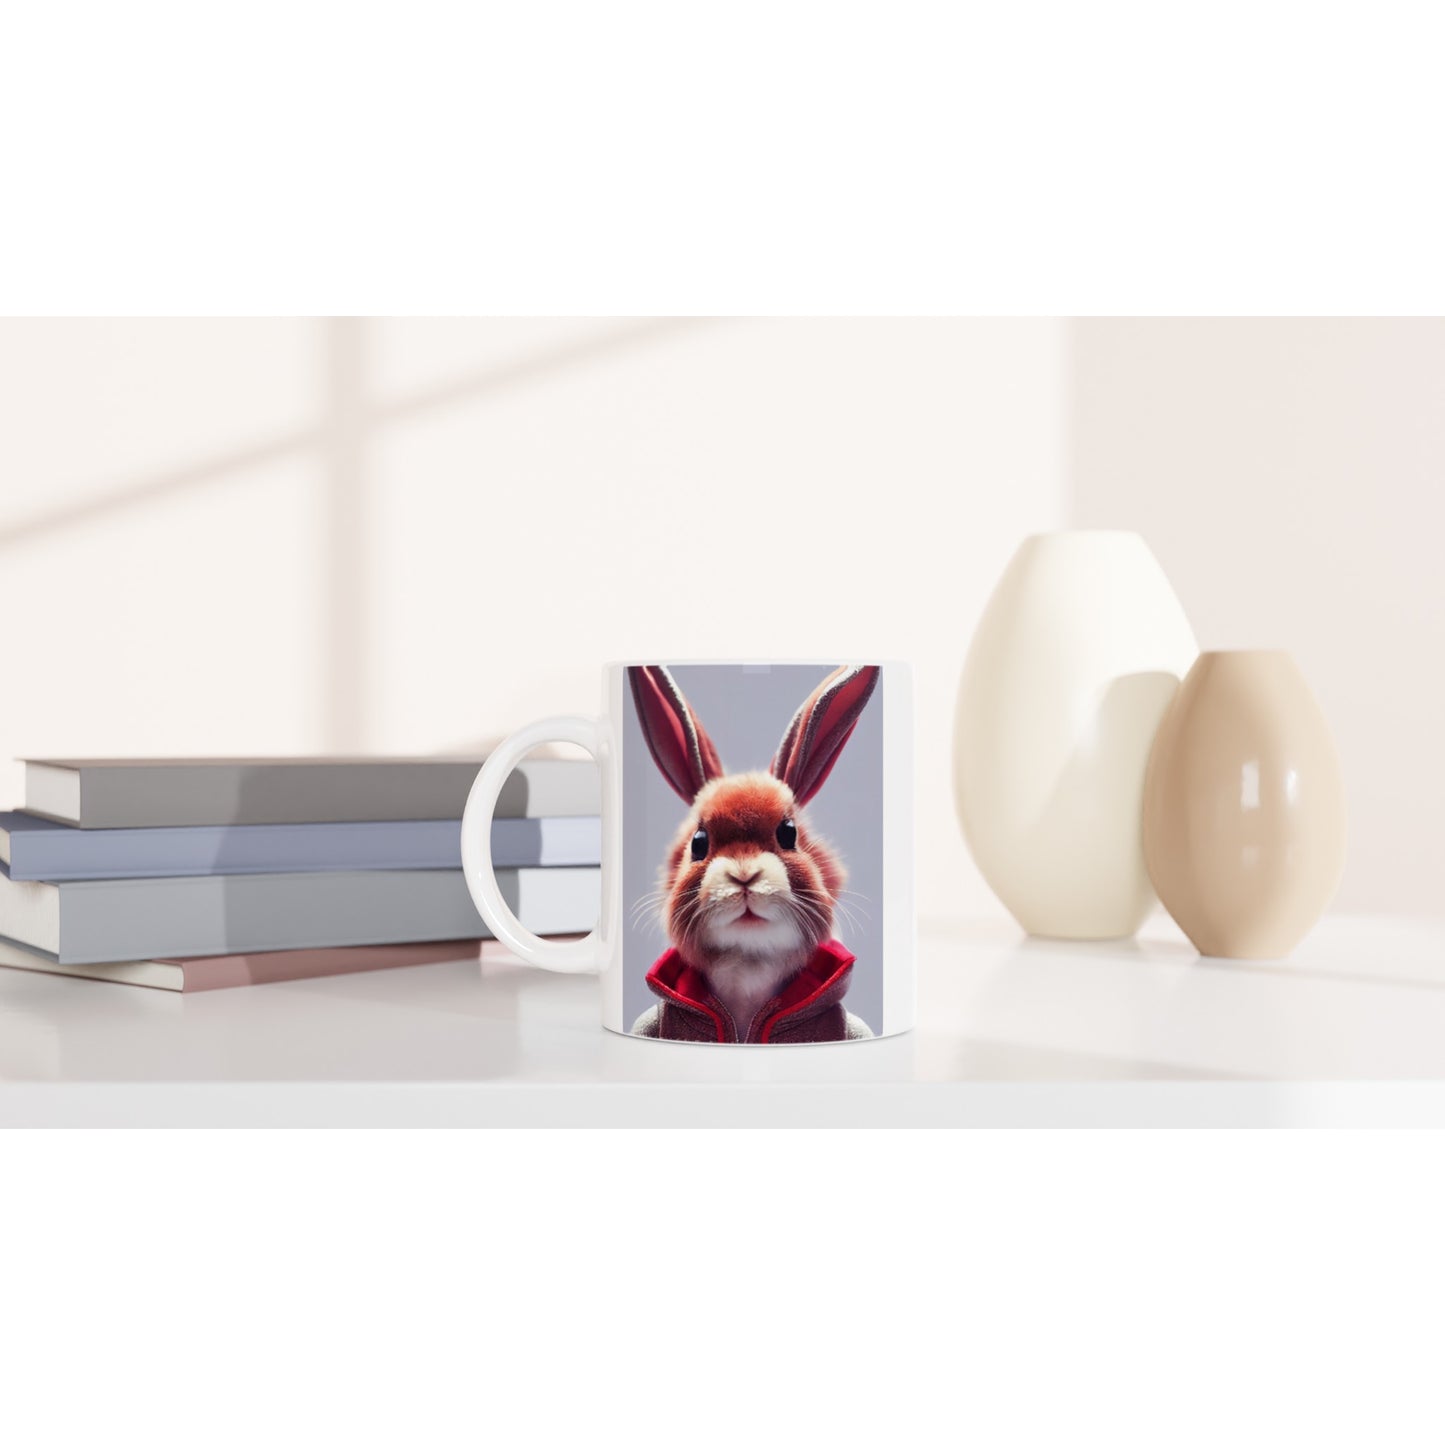 Personalisierbare Tasse - Bunny in grey red tracksuit - "Julius" - Acryl art - personalized mug - customized mug - Cute rabbit - Marke:- Pixelboys - Brand - Art Prints - Marke - Wandkunst - Papierstärke: 250g/qm - Wall Art - Bunny crew - Skater Betty - Hasen Gang - Original - Künstler:Pixelboys - Poster with frame - Office Poster - Acrylkunst - Trend - Wandschmuck - Acrylbild - Atelier Canada - 